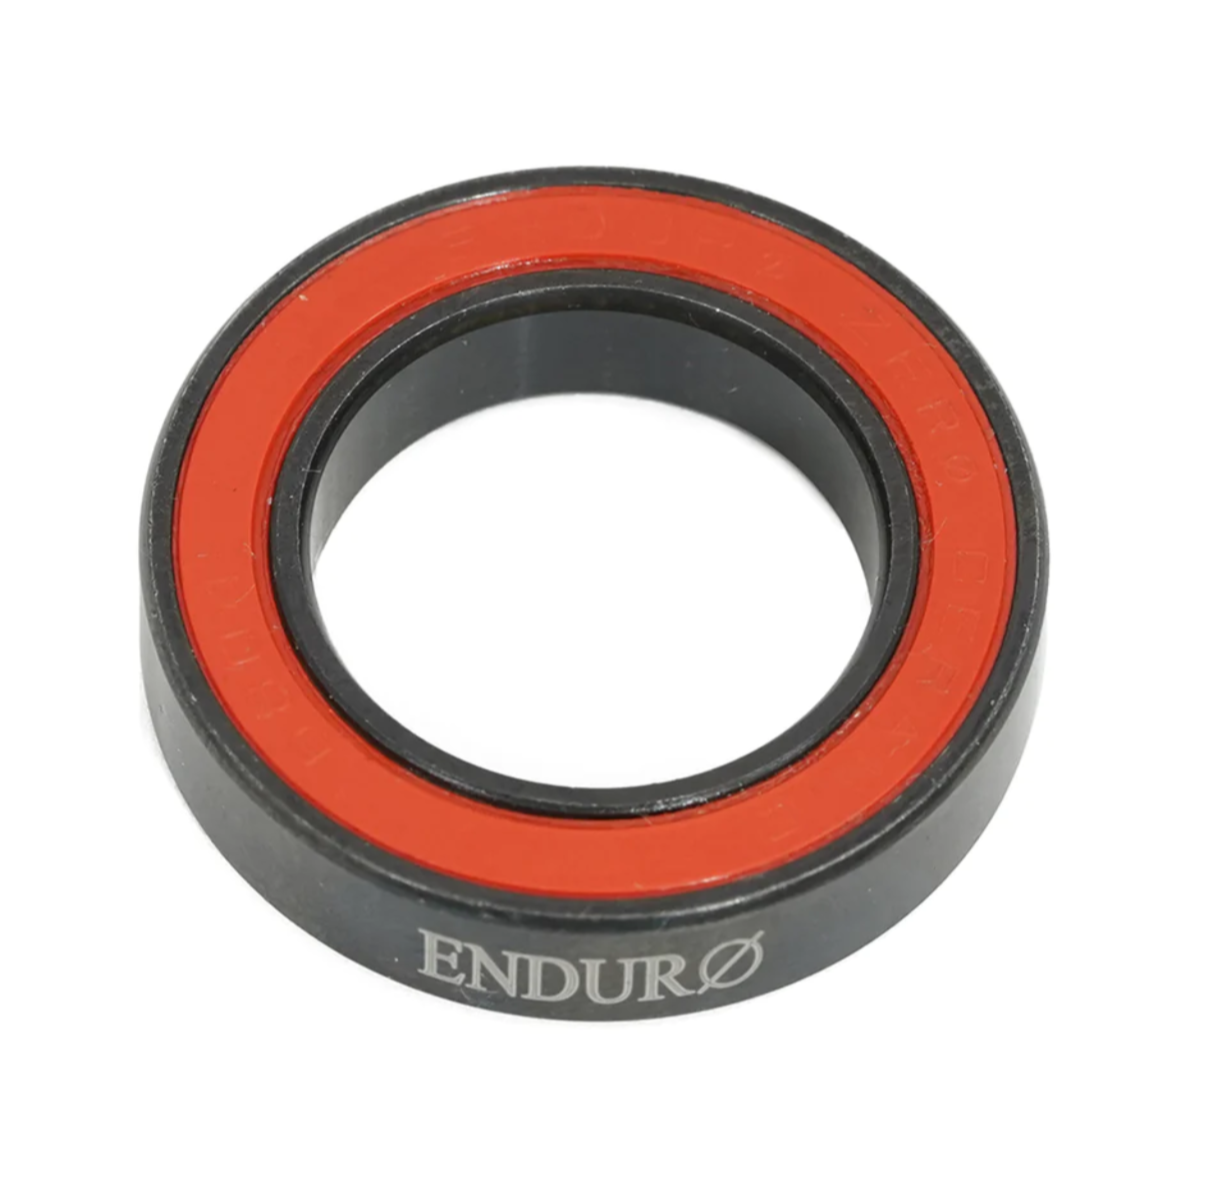 Enduro clutch bearings